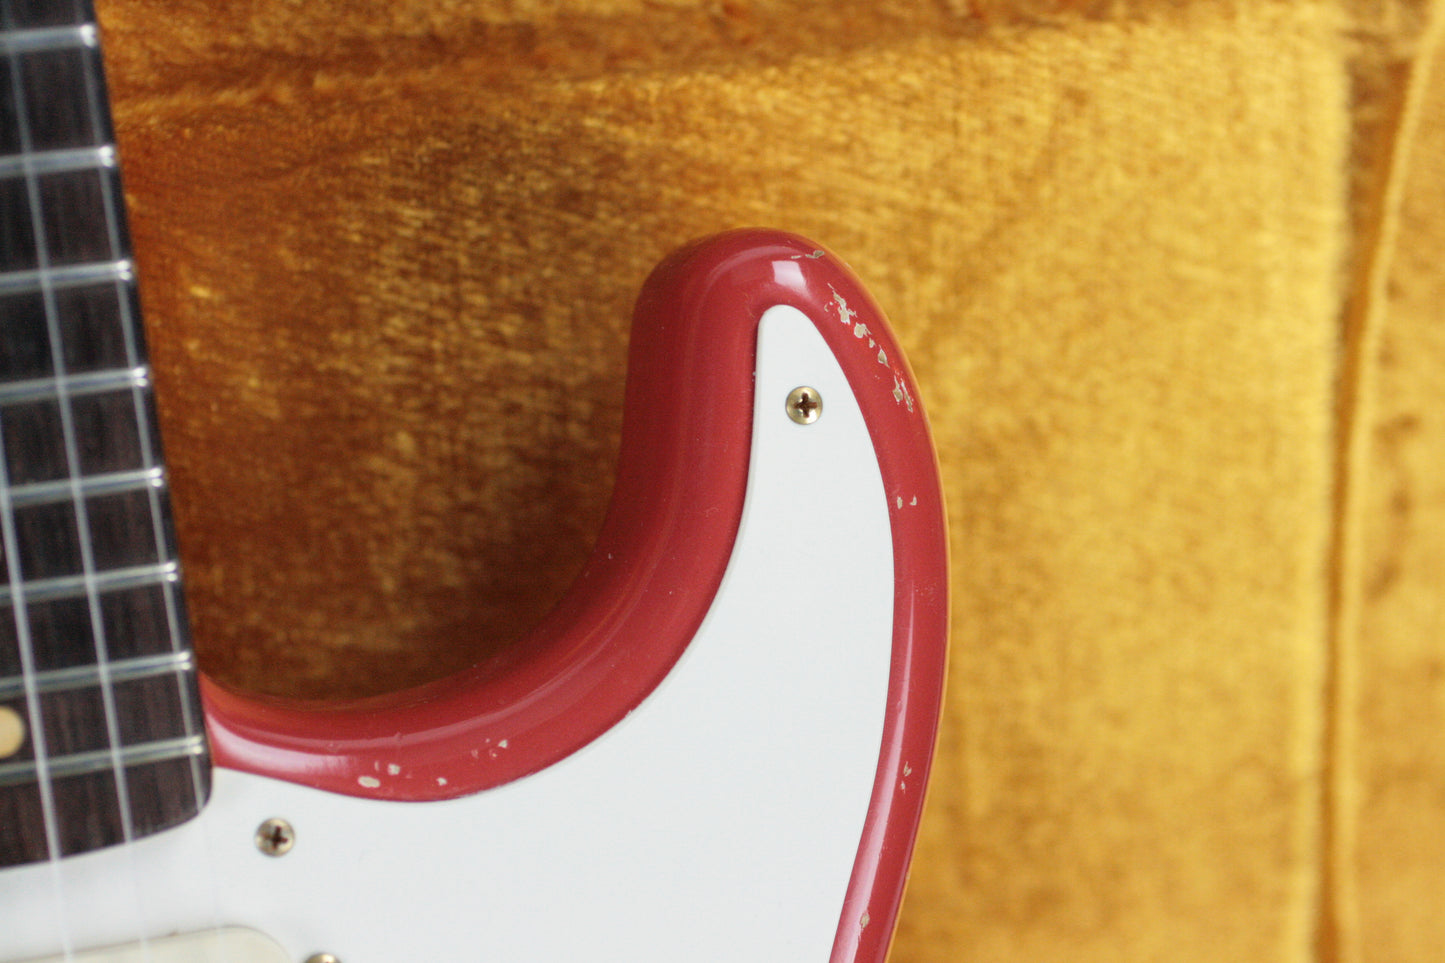 '59 Fender JOHN ENGLISH Masterbuilt Stratocaster Relic Brazilian Rosewood Custom Shop Strat 1959